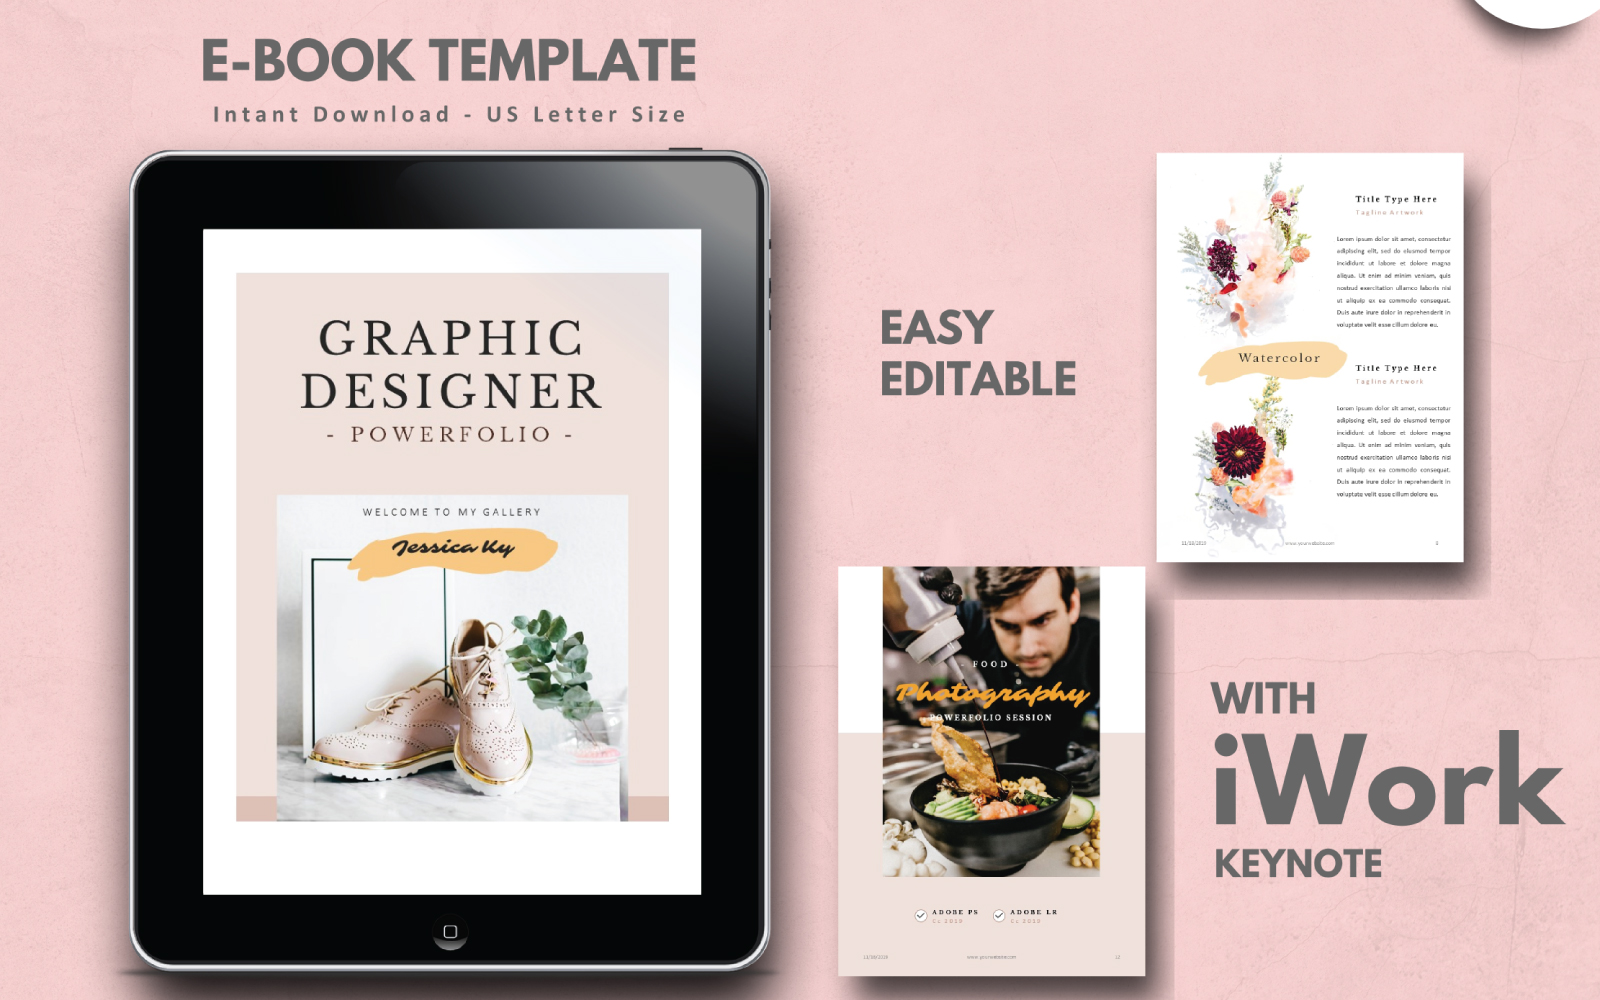 Graphic Designer Portfolio eBook Template Keynote Presentation